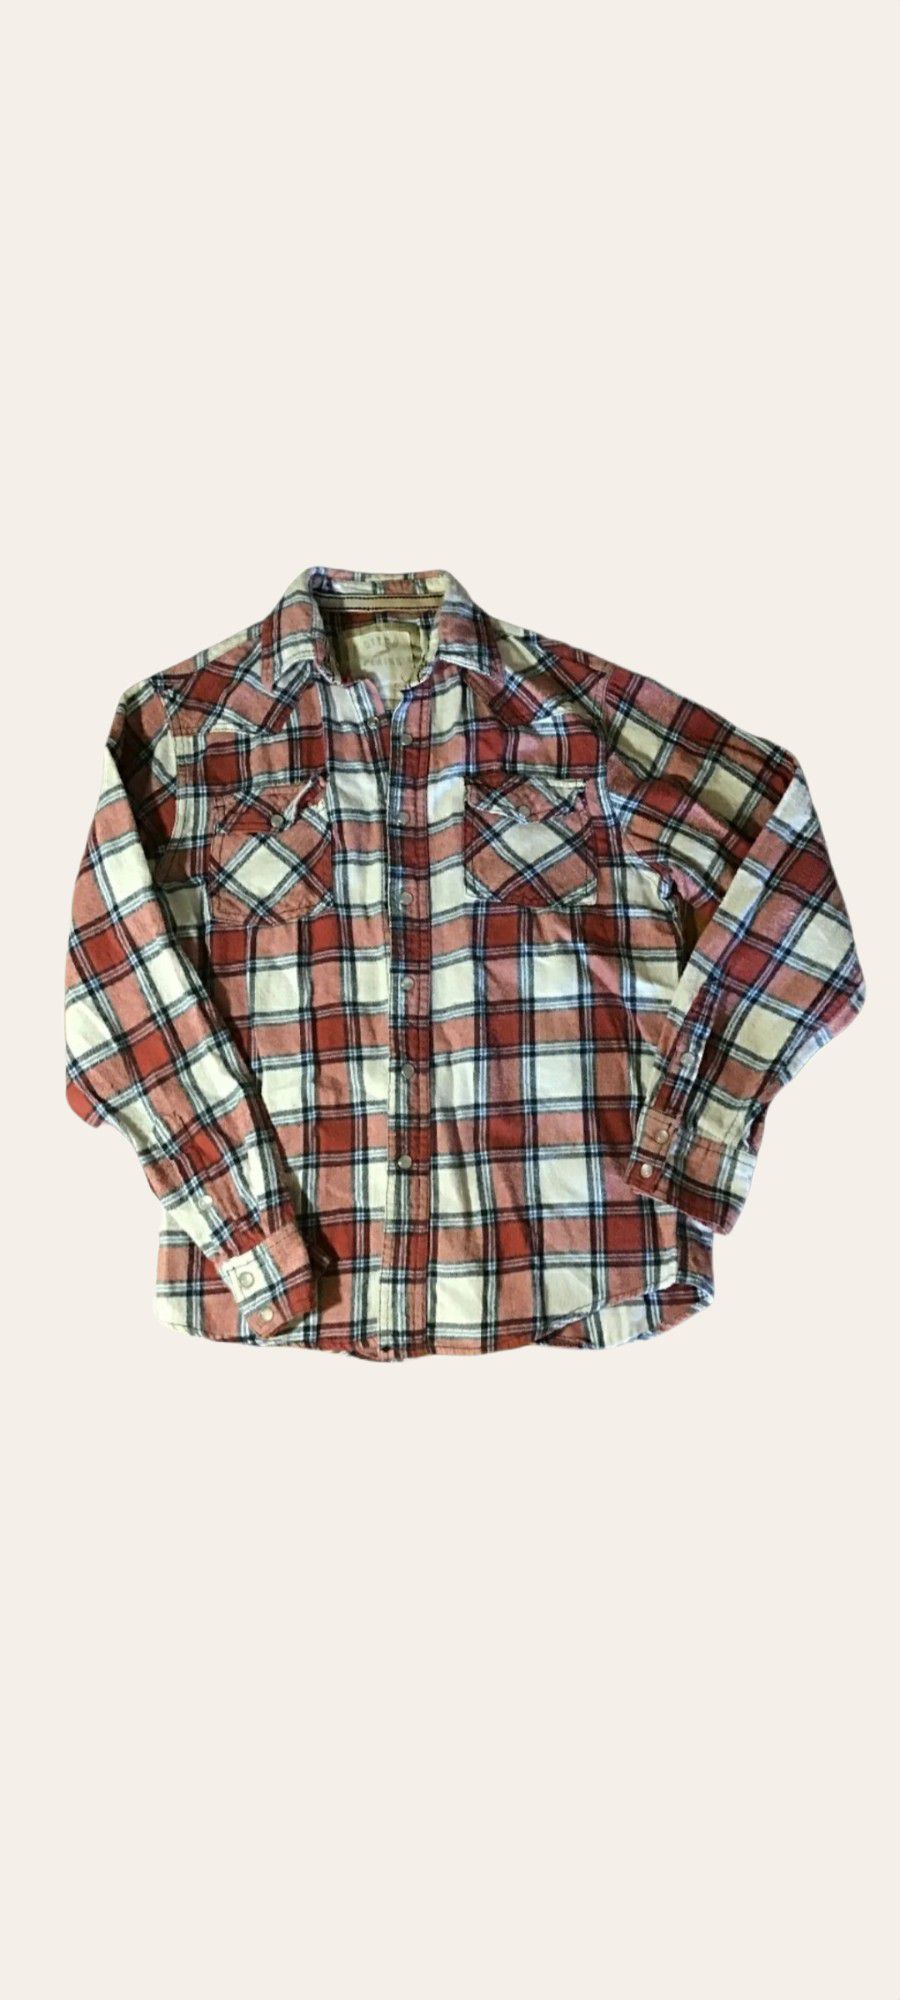 Ditch Plains Small Checkered Plaid Long Sleeve Flannel Shirt